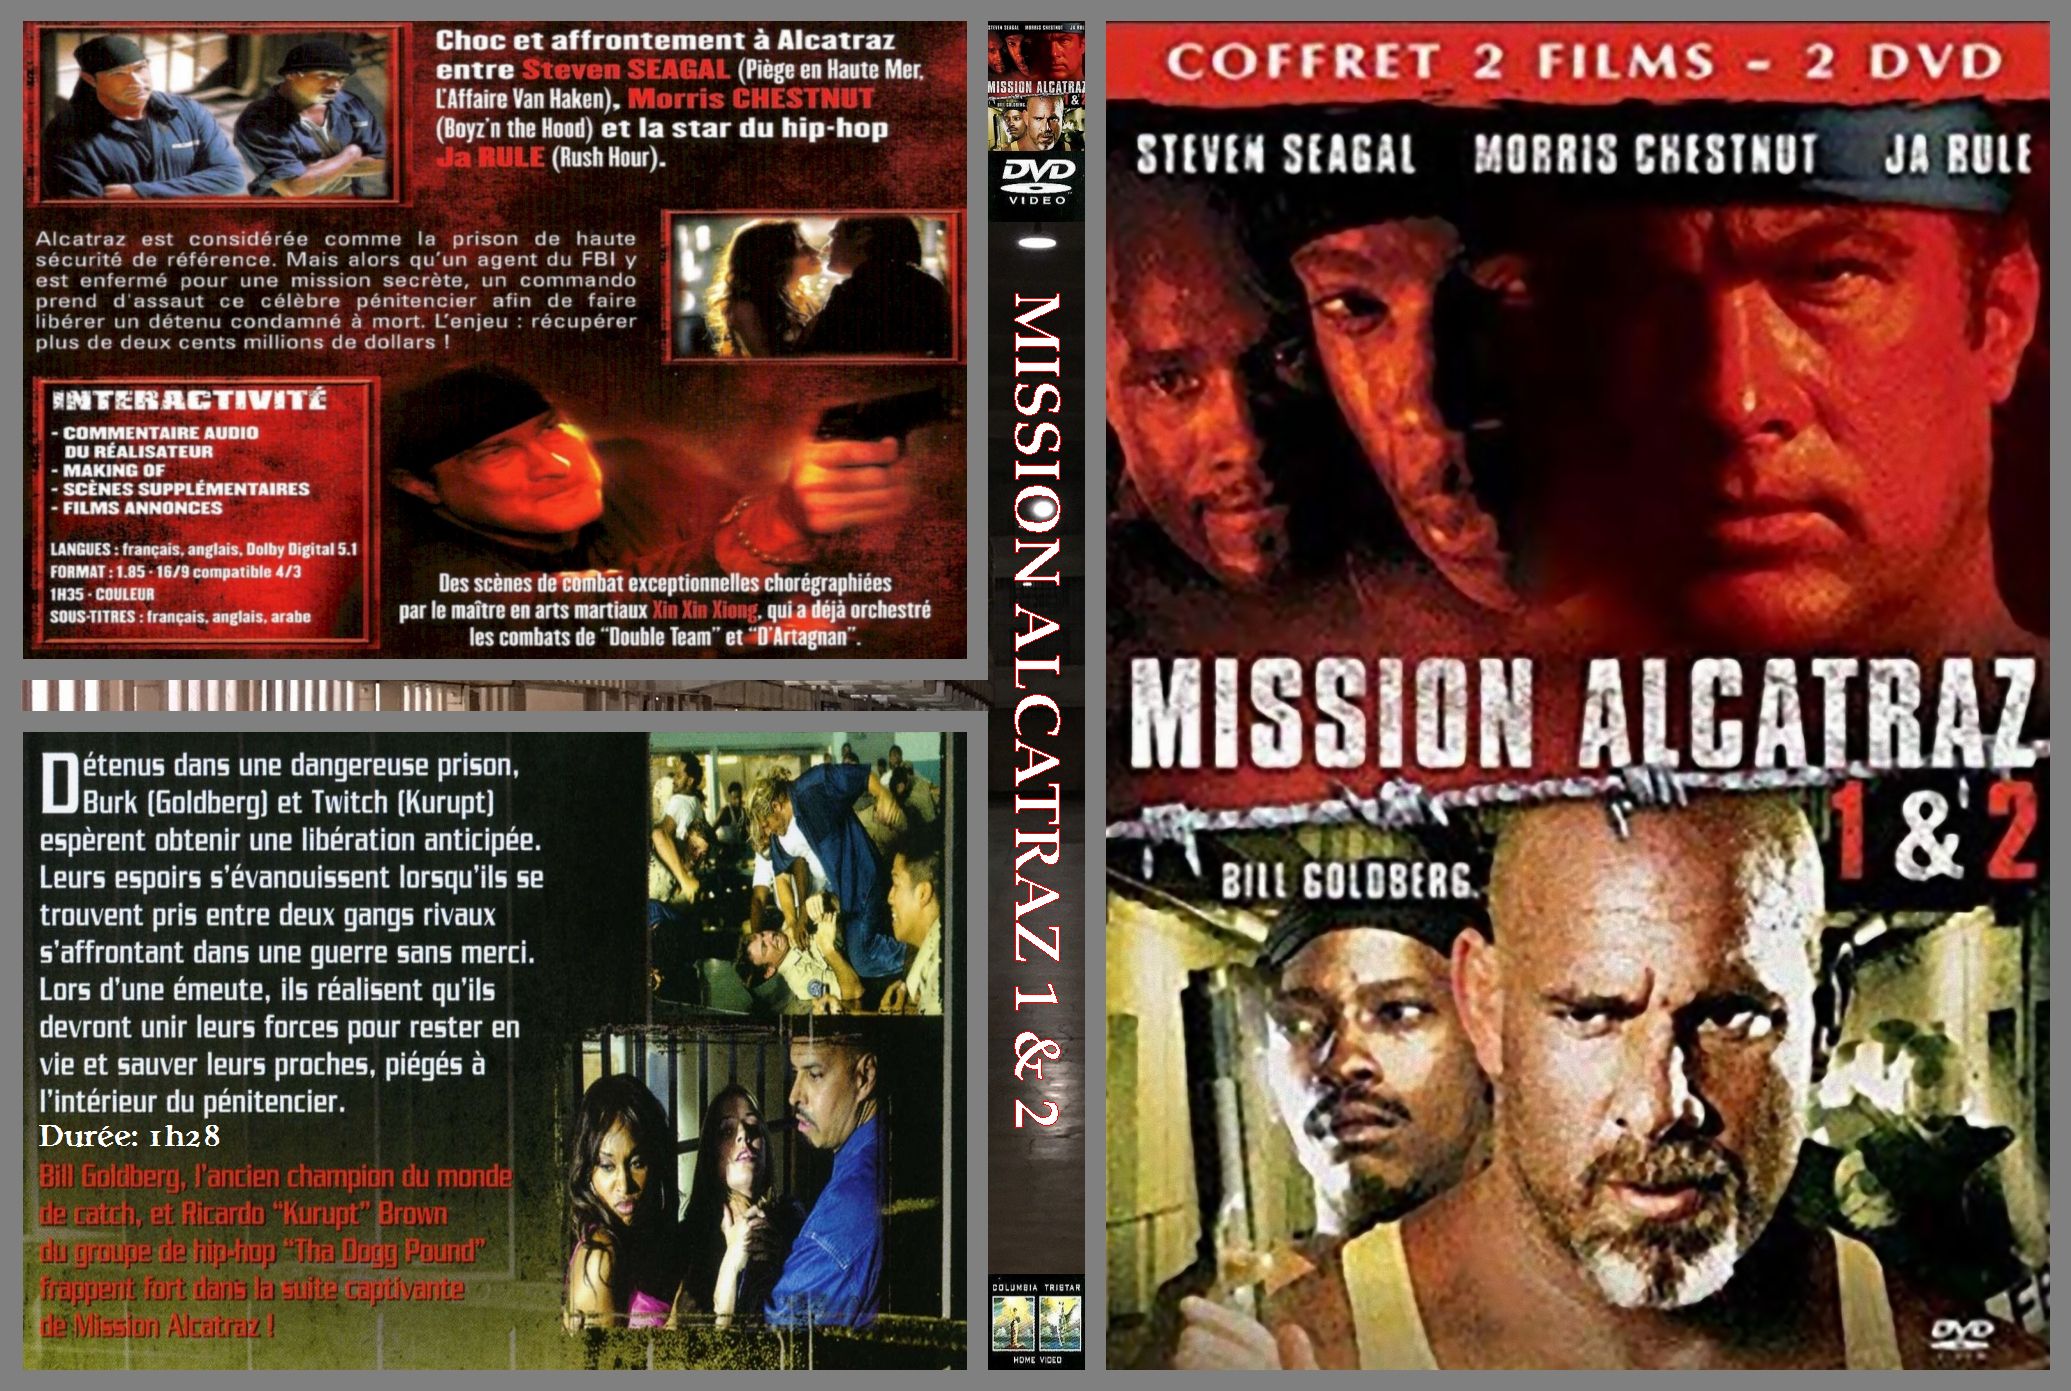 Jaquette DVD Mission Alcatraz 1 & 2 Custom 